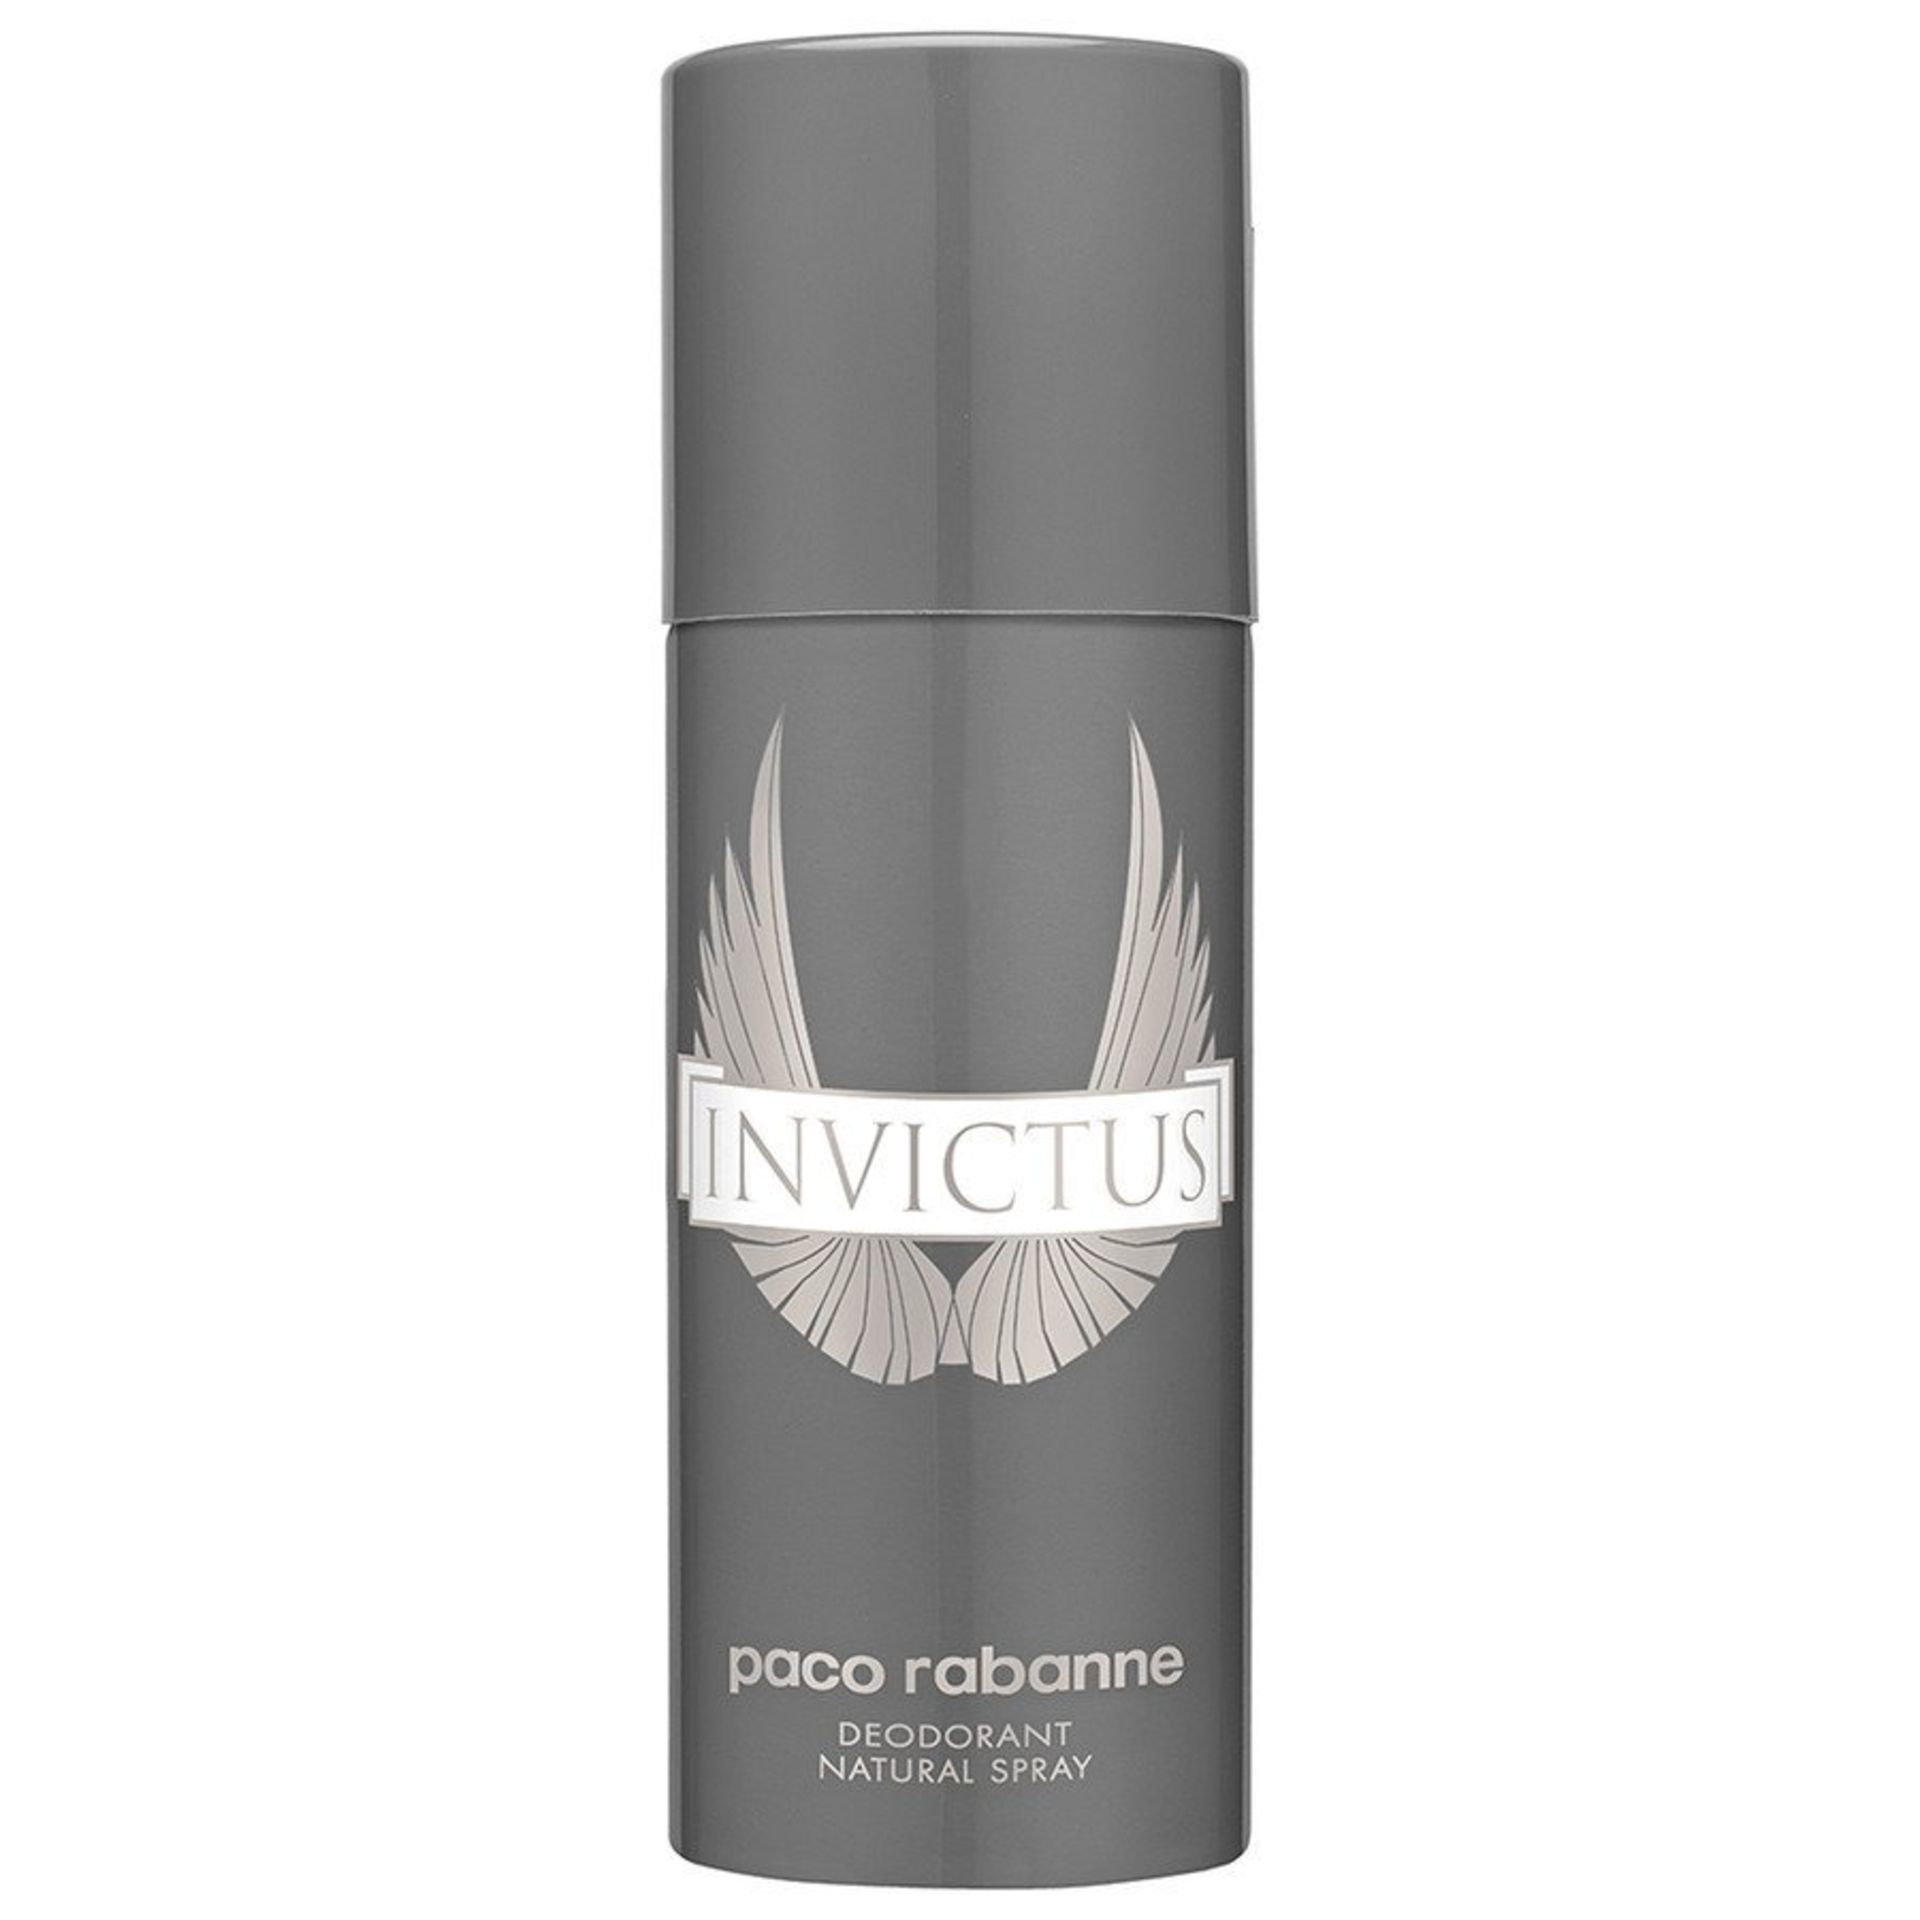 V Brand New Paco Rabanne Invictus 150ml Deodorant Spray